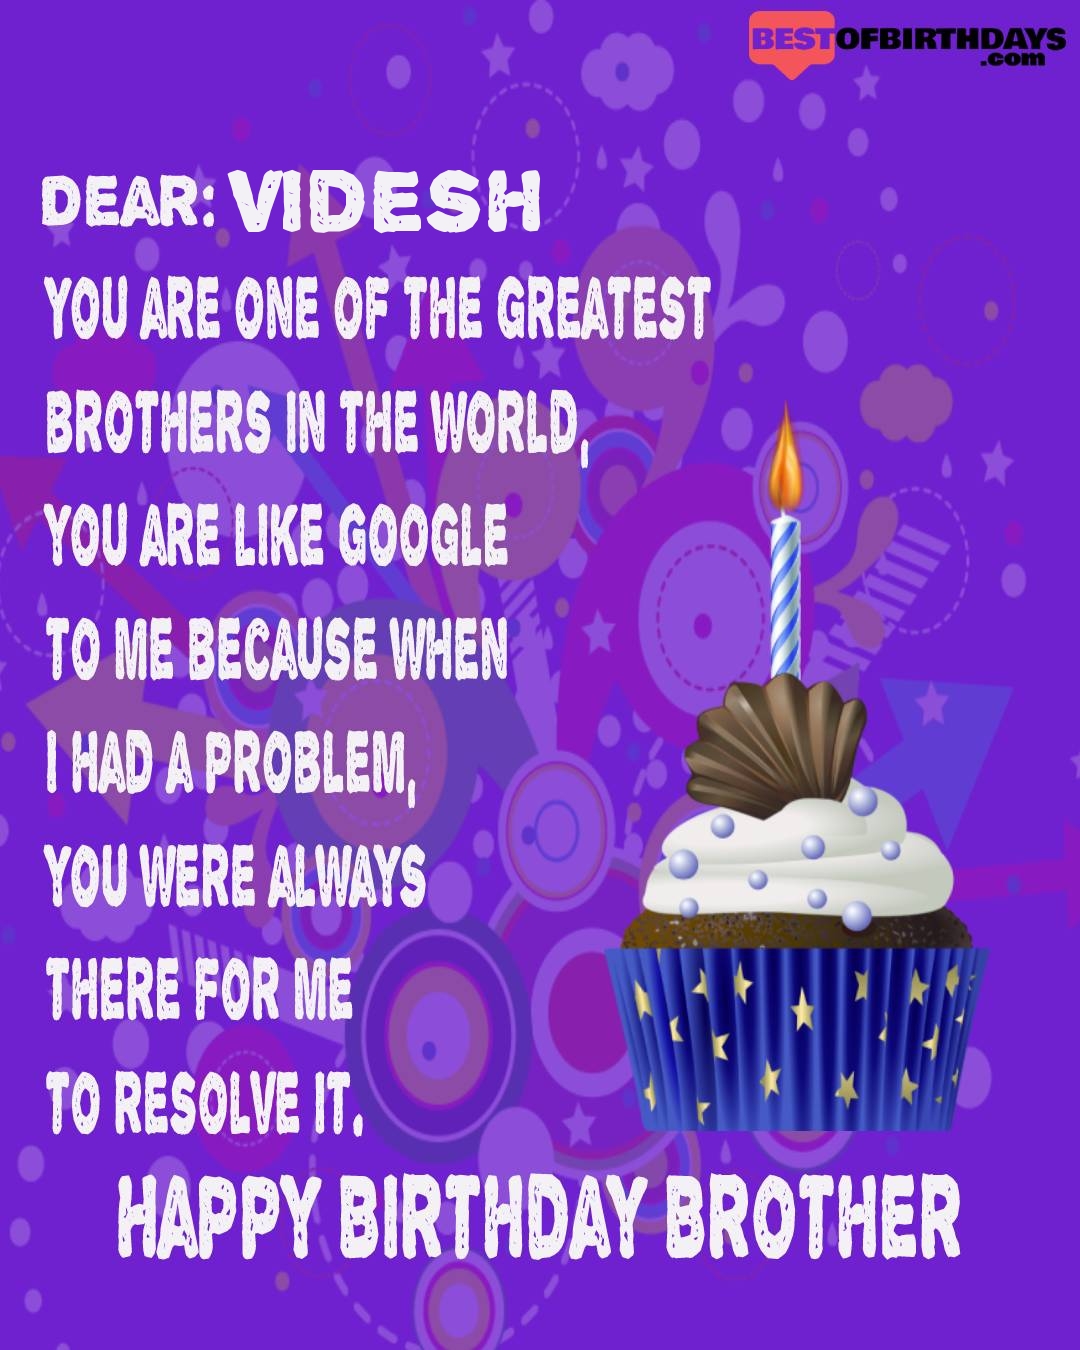 Happy birthday videsh bhai brother bro